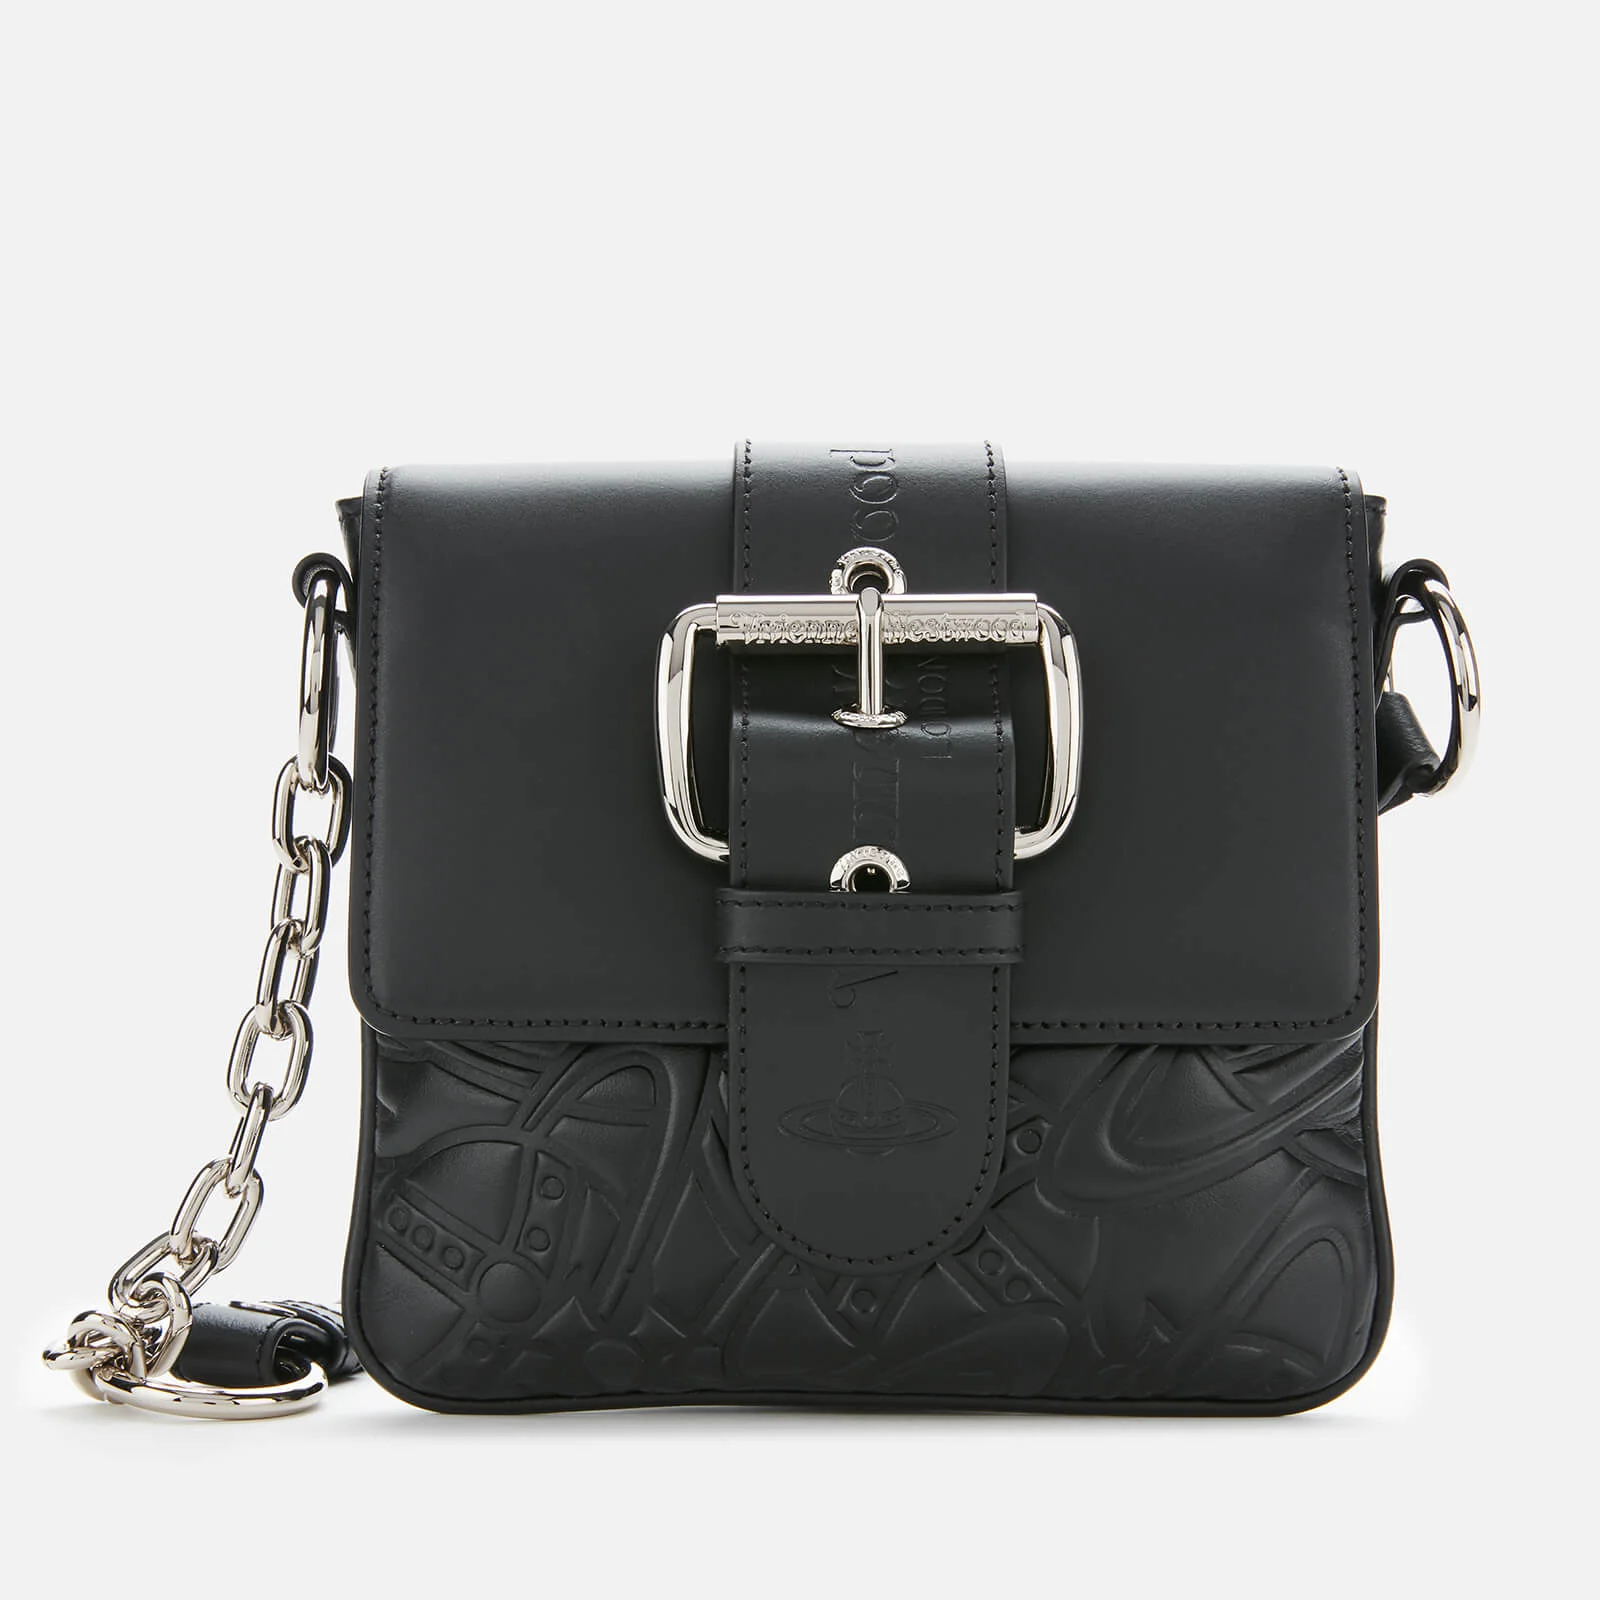 Vivienne Westwood Women's Alexa Small Handbag - Black Image 1